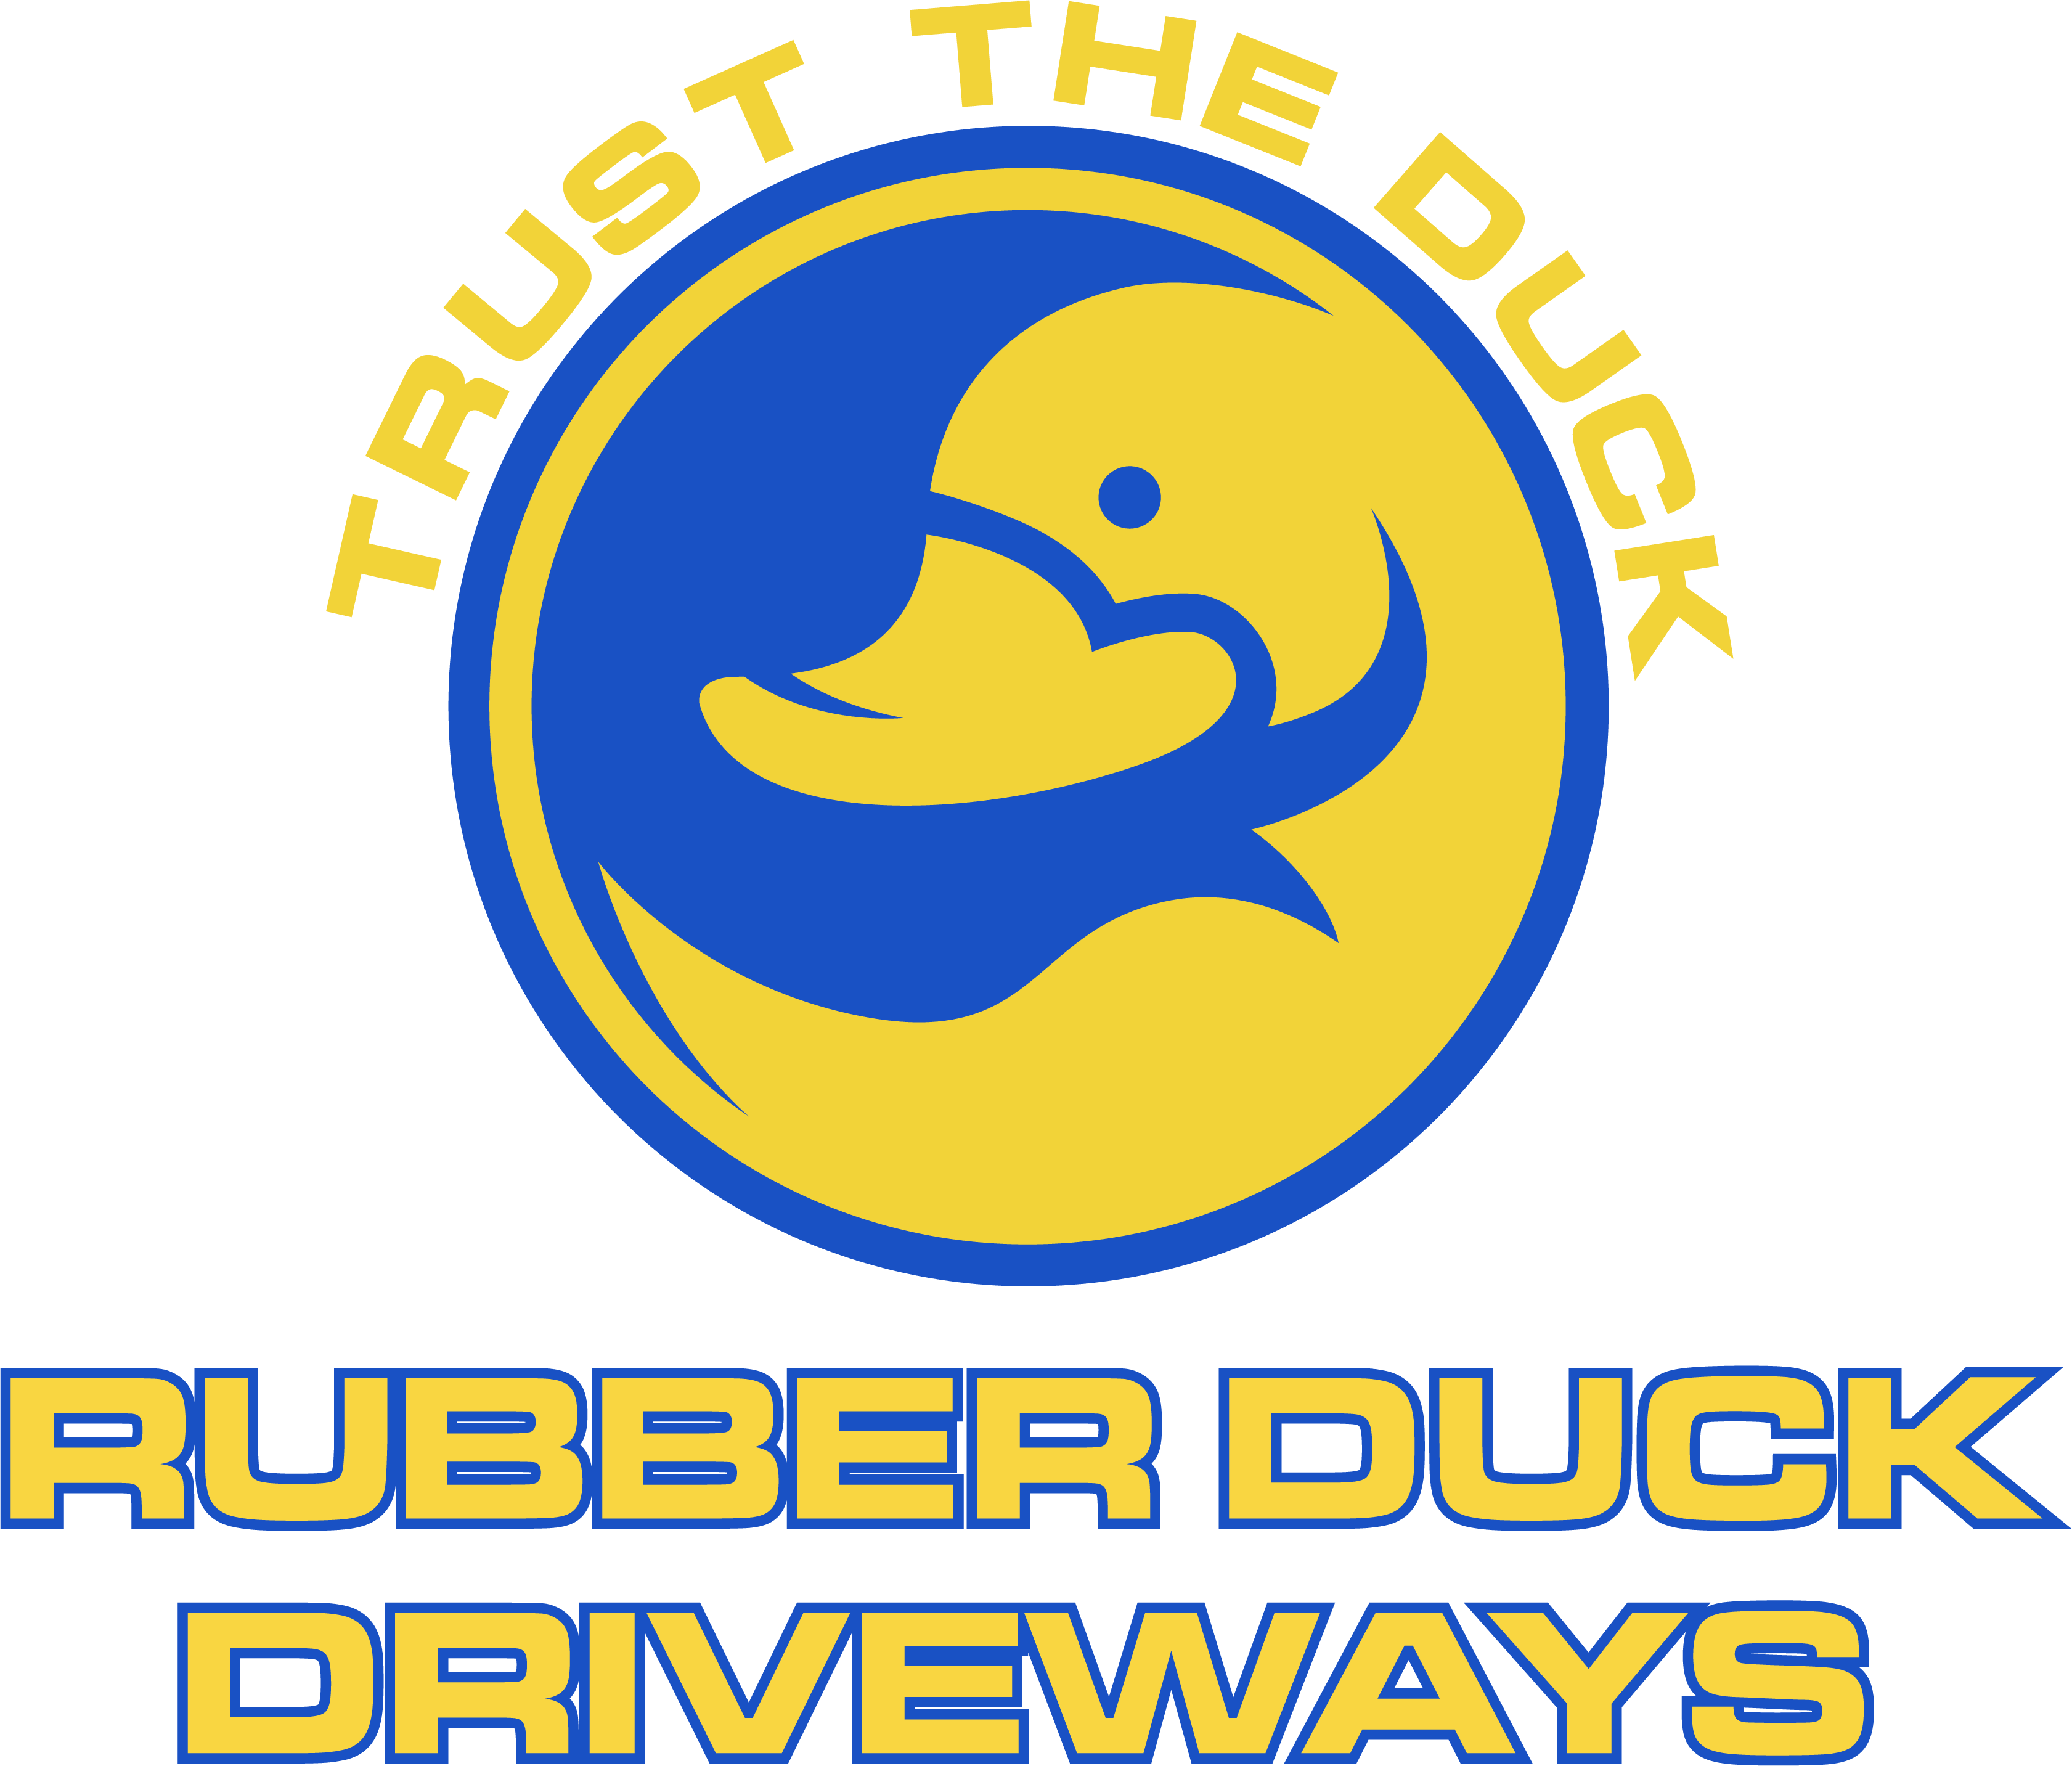 Rubber Duck Driveways - Rubber Paving Services